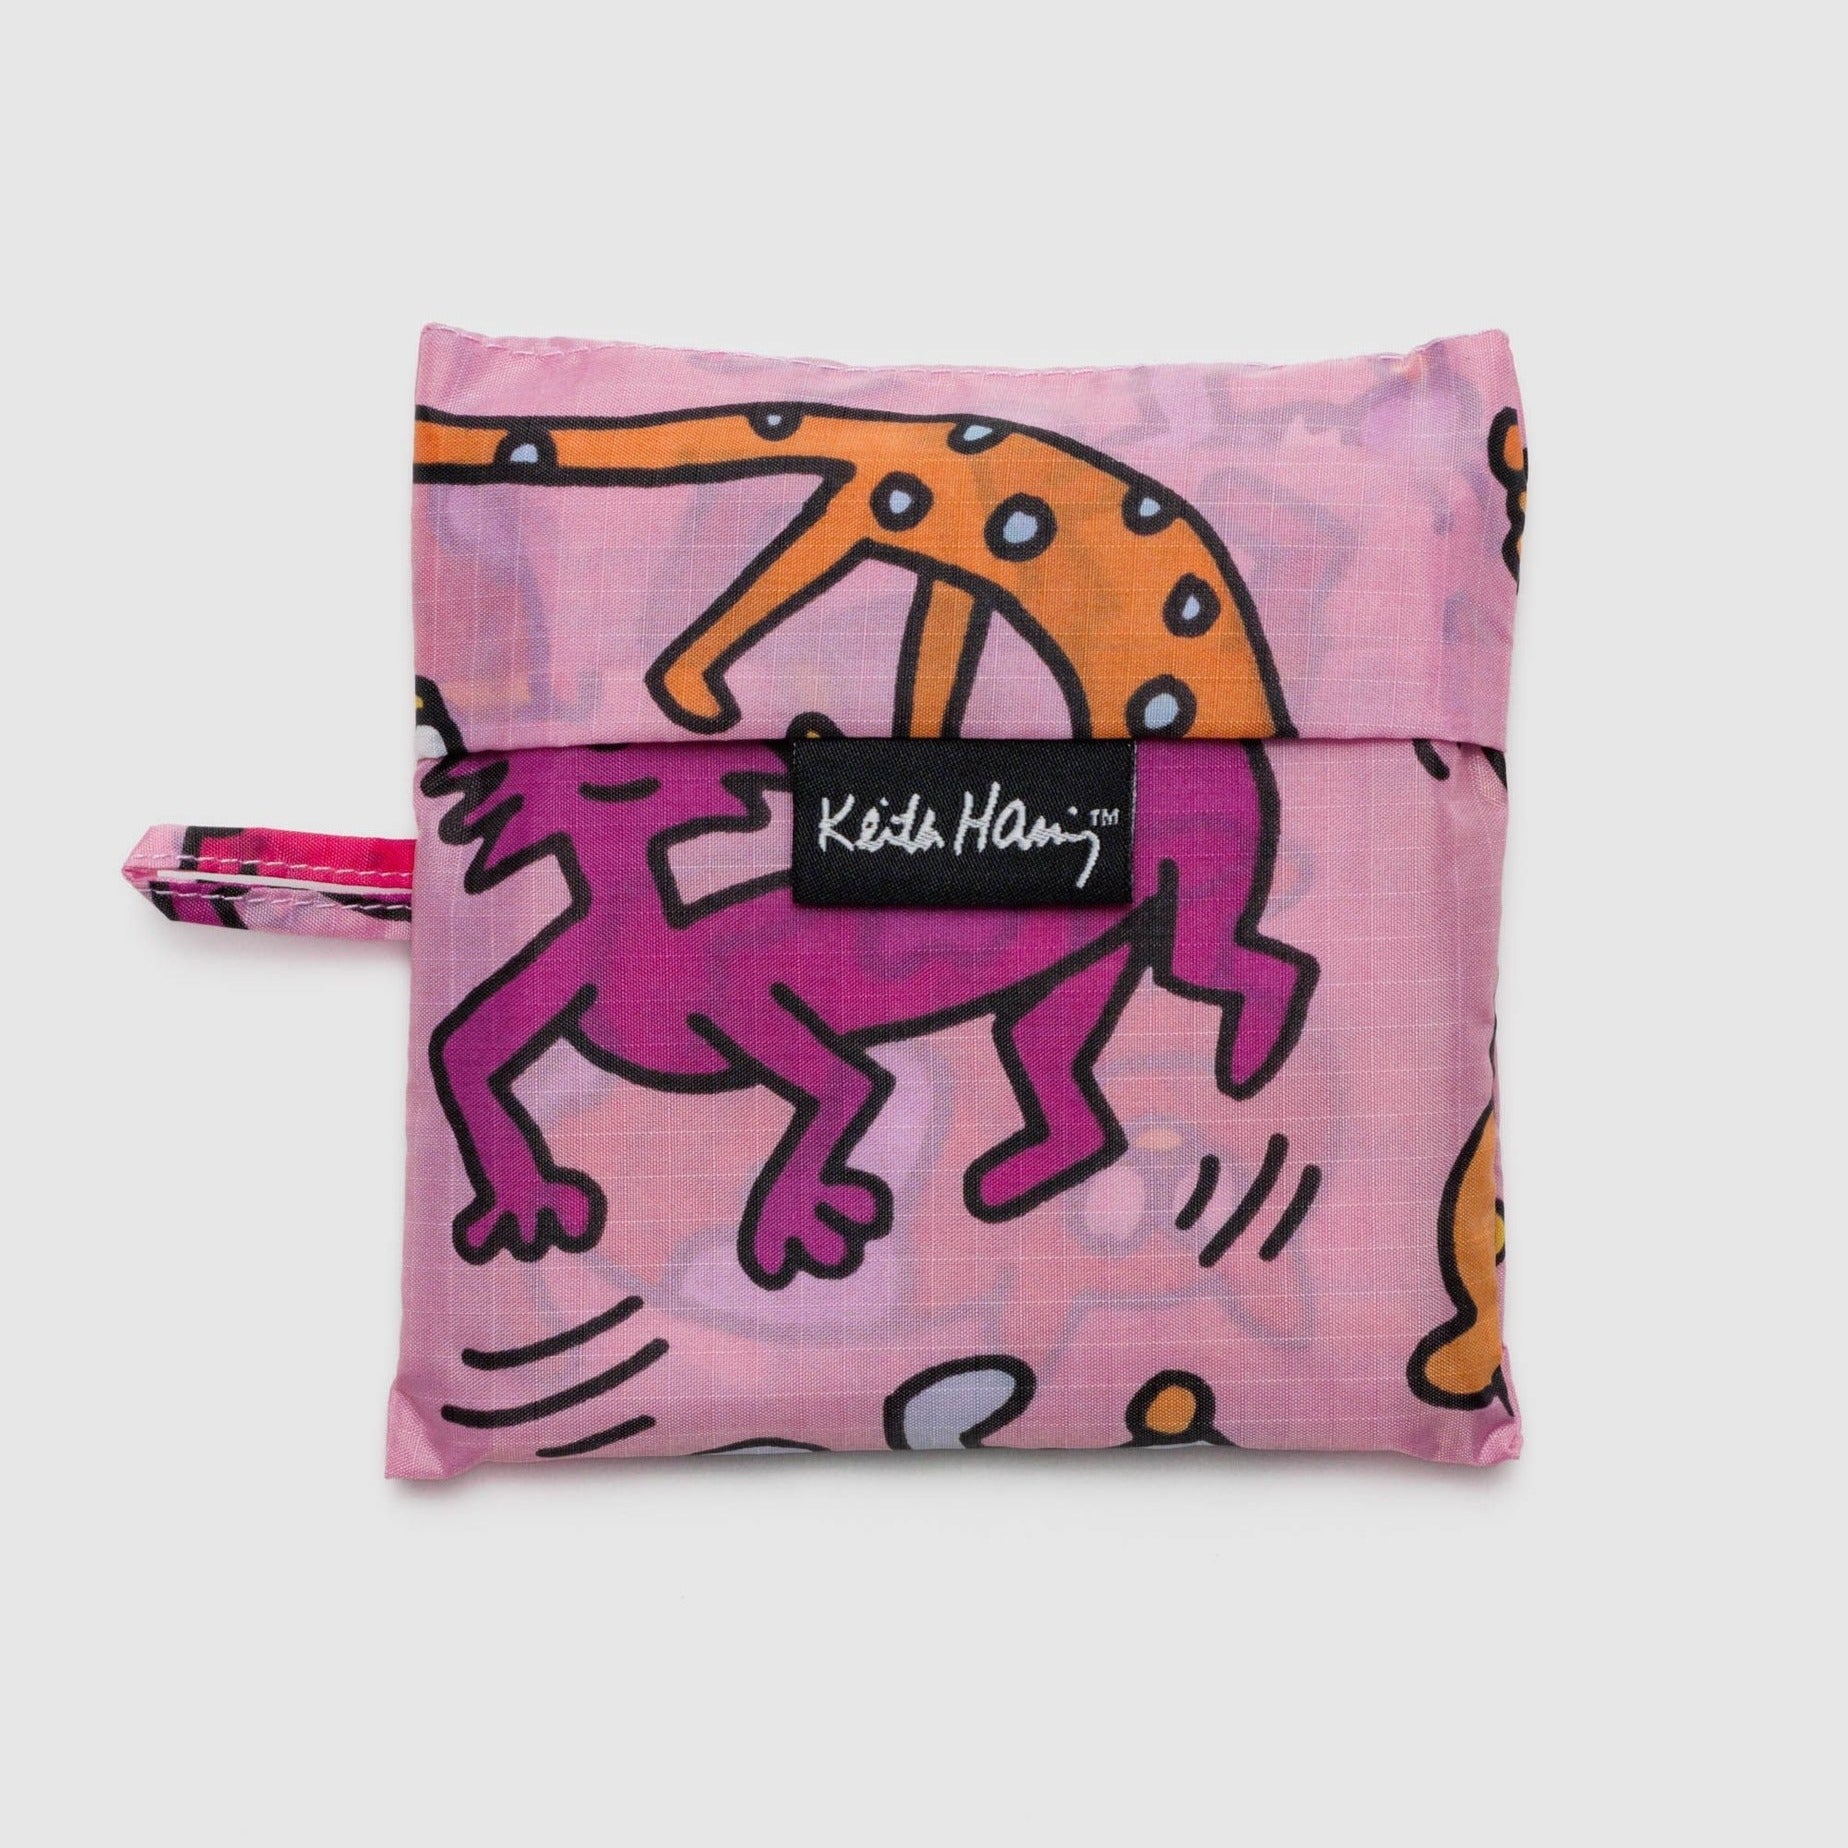 Bolsa Standard BAGGU - Keith Haring Pets